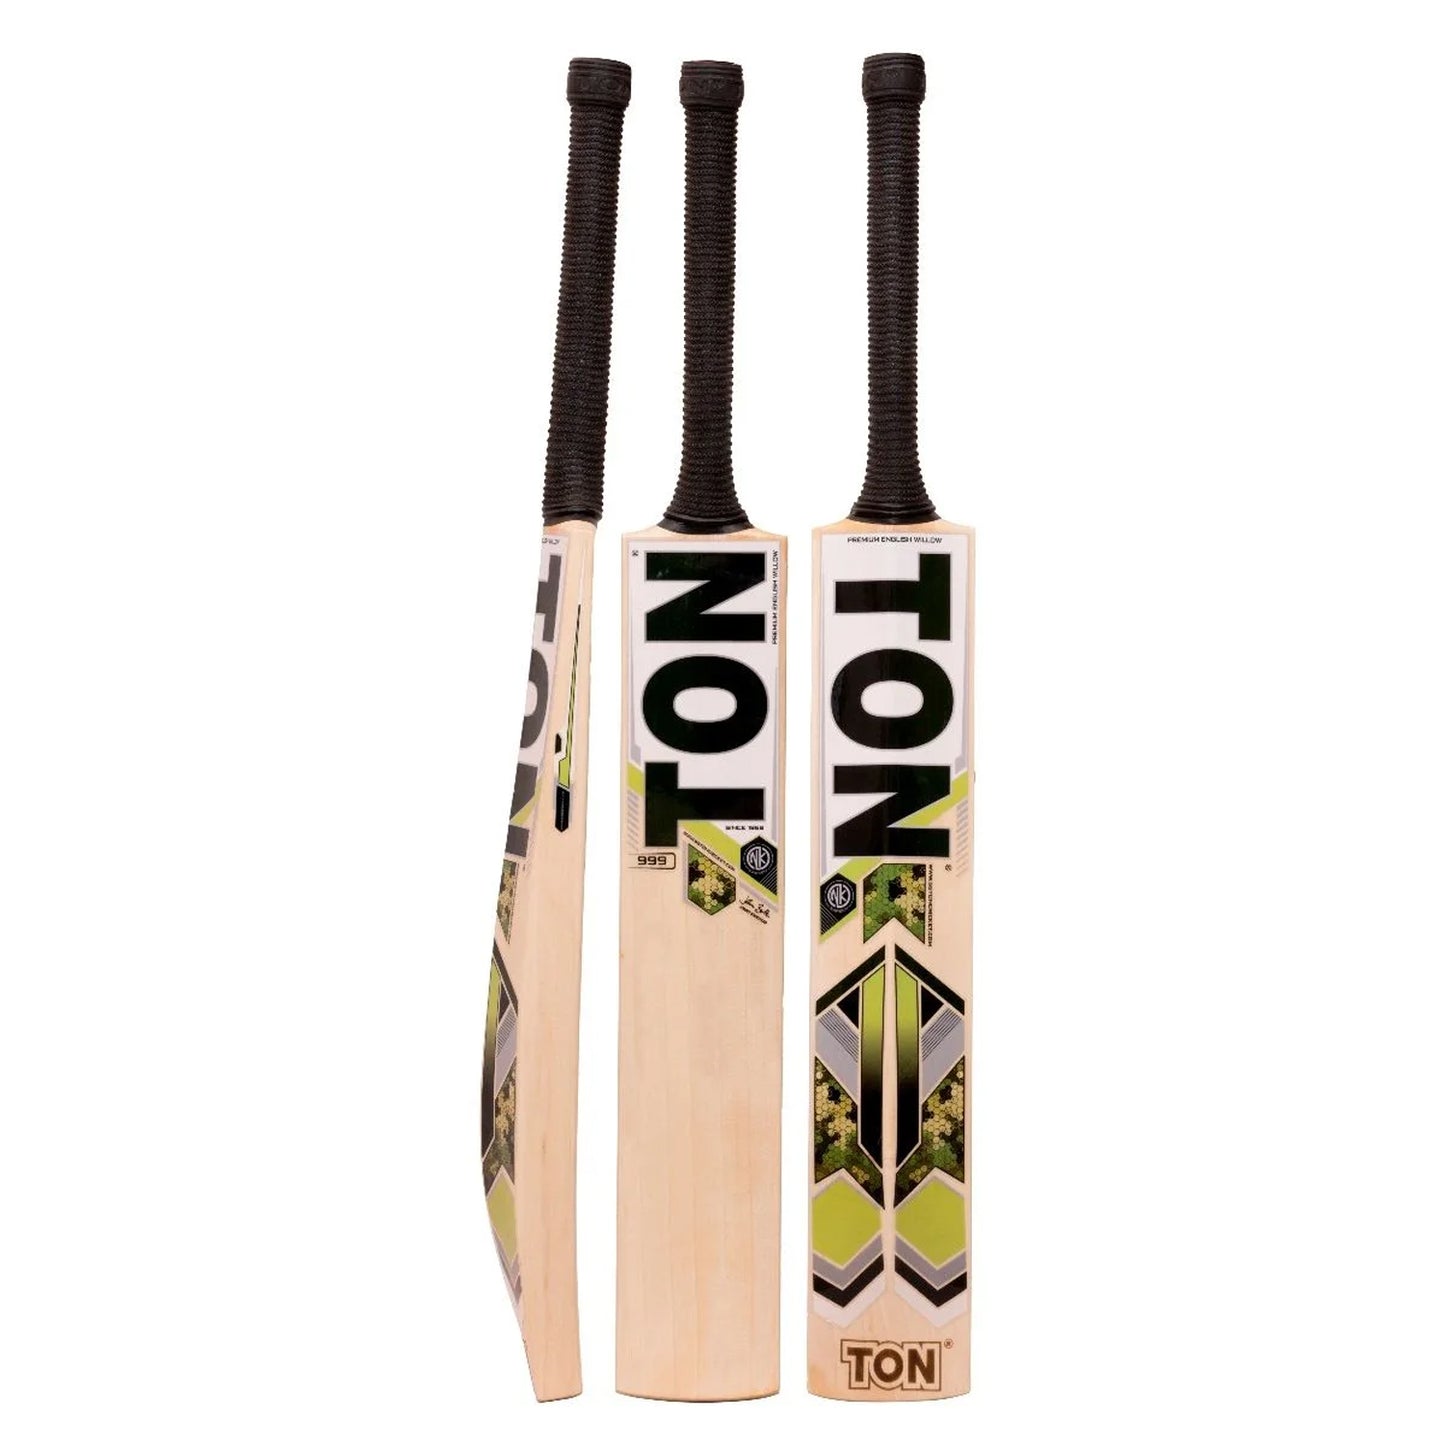 SS Ton 999 English Willow Cricket Bat - Best Price online Prokicksports.com